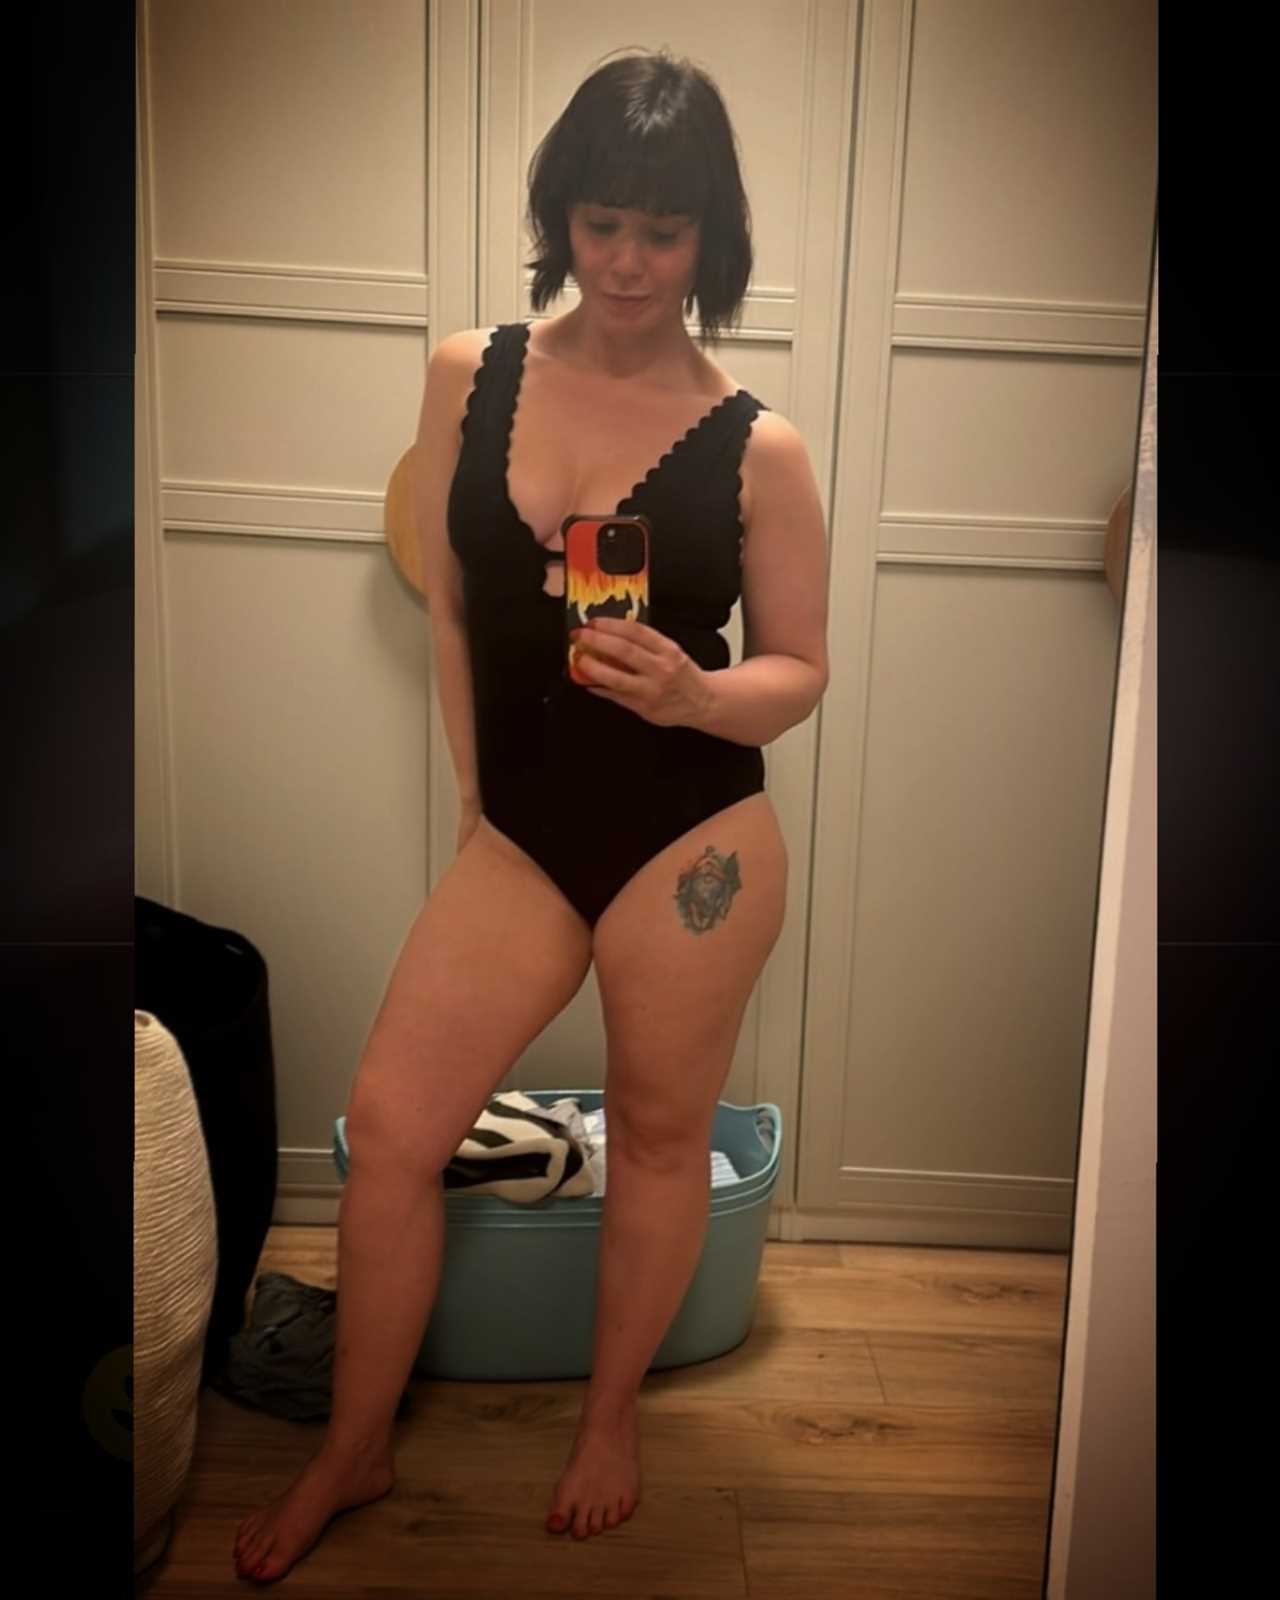 Hollyoaks star Jessica Fox praised for body acceptance post